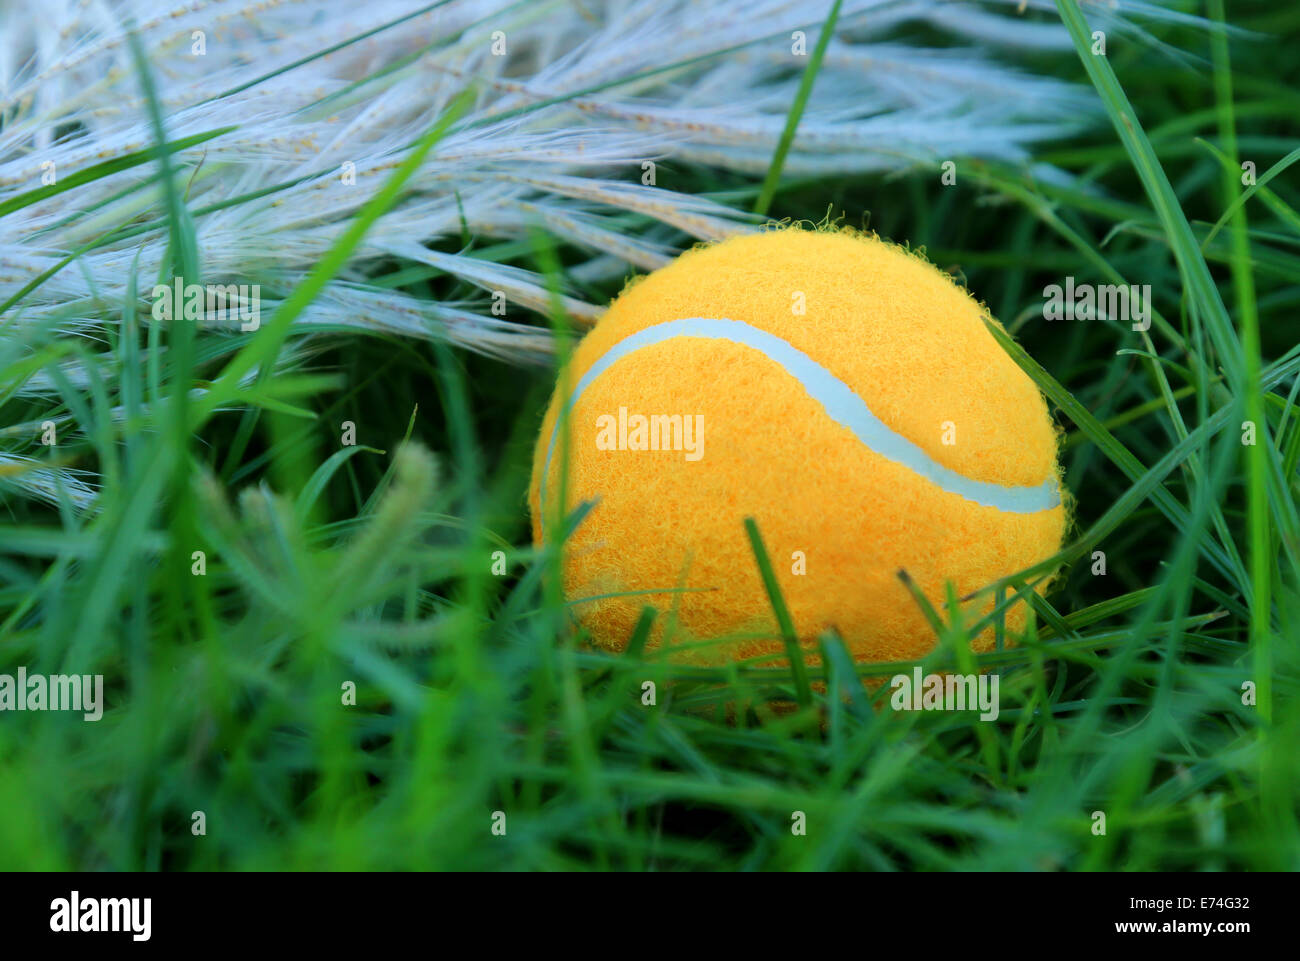 Tennis ball on green grass surface Stock Photo